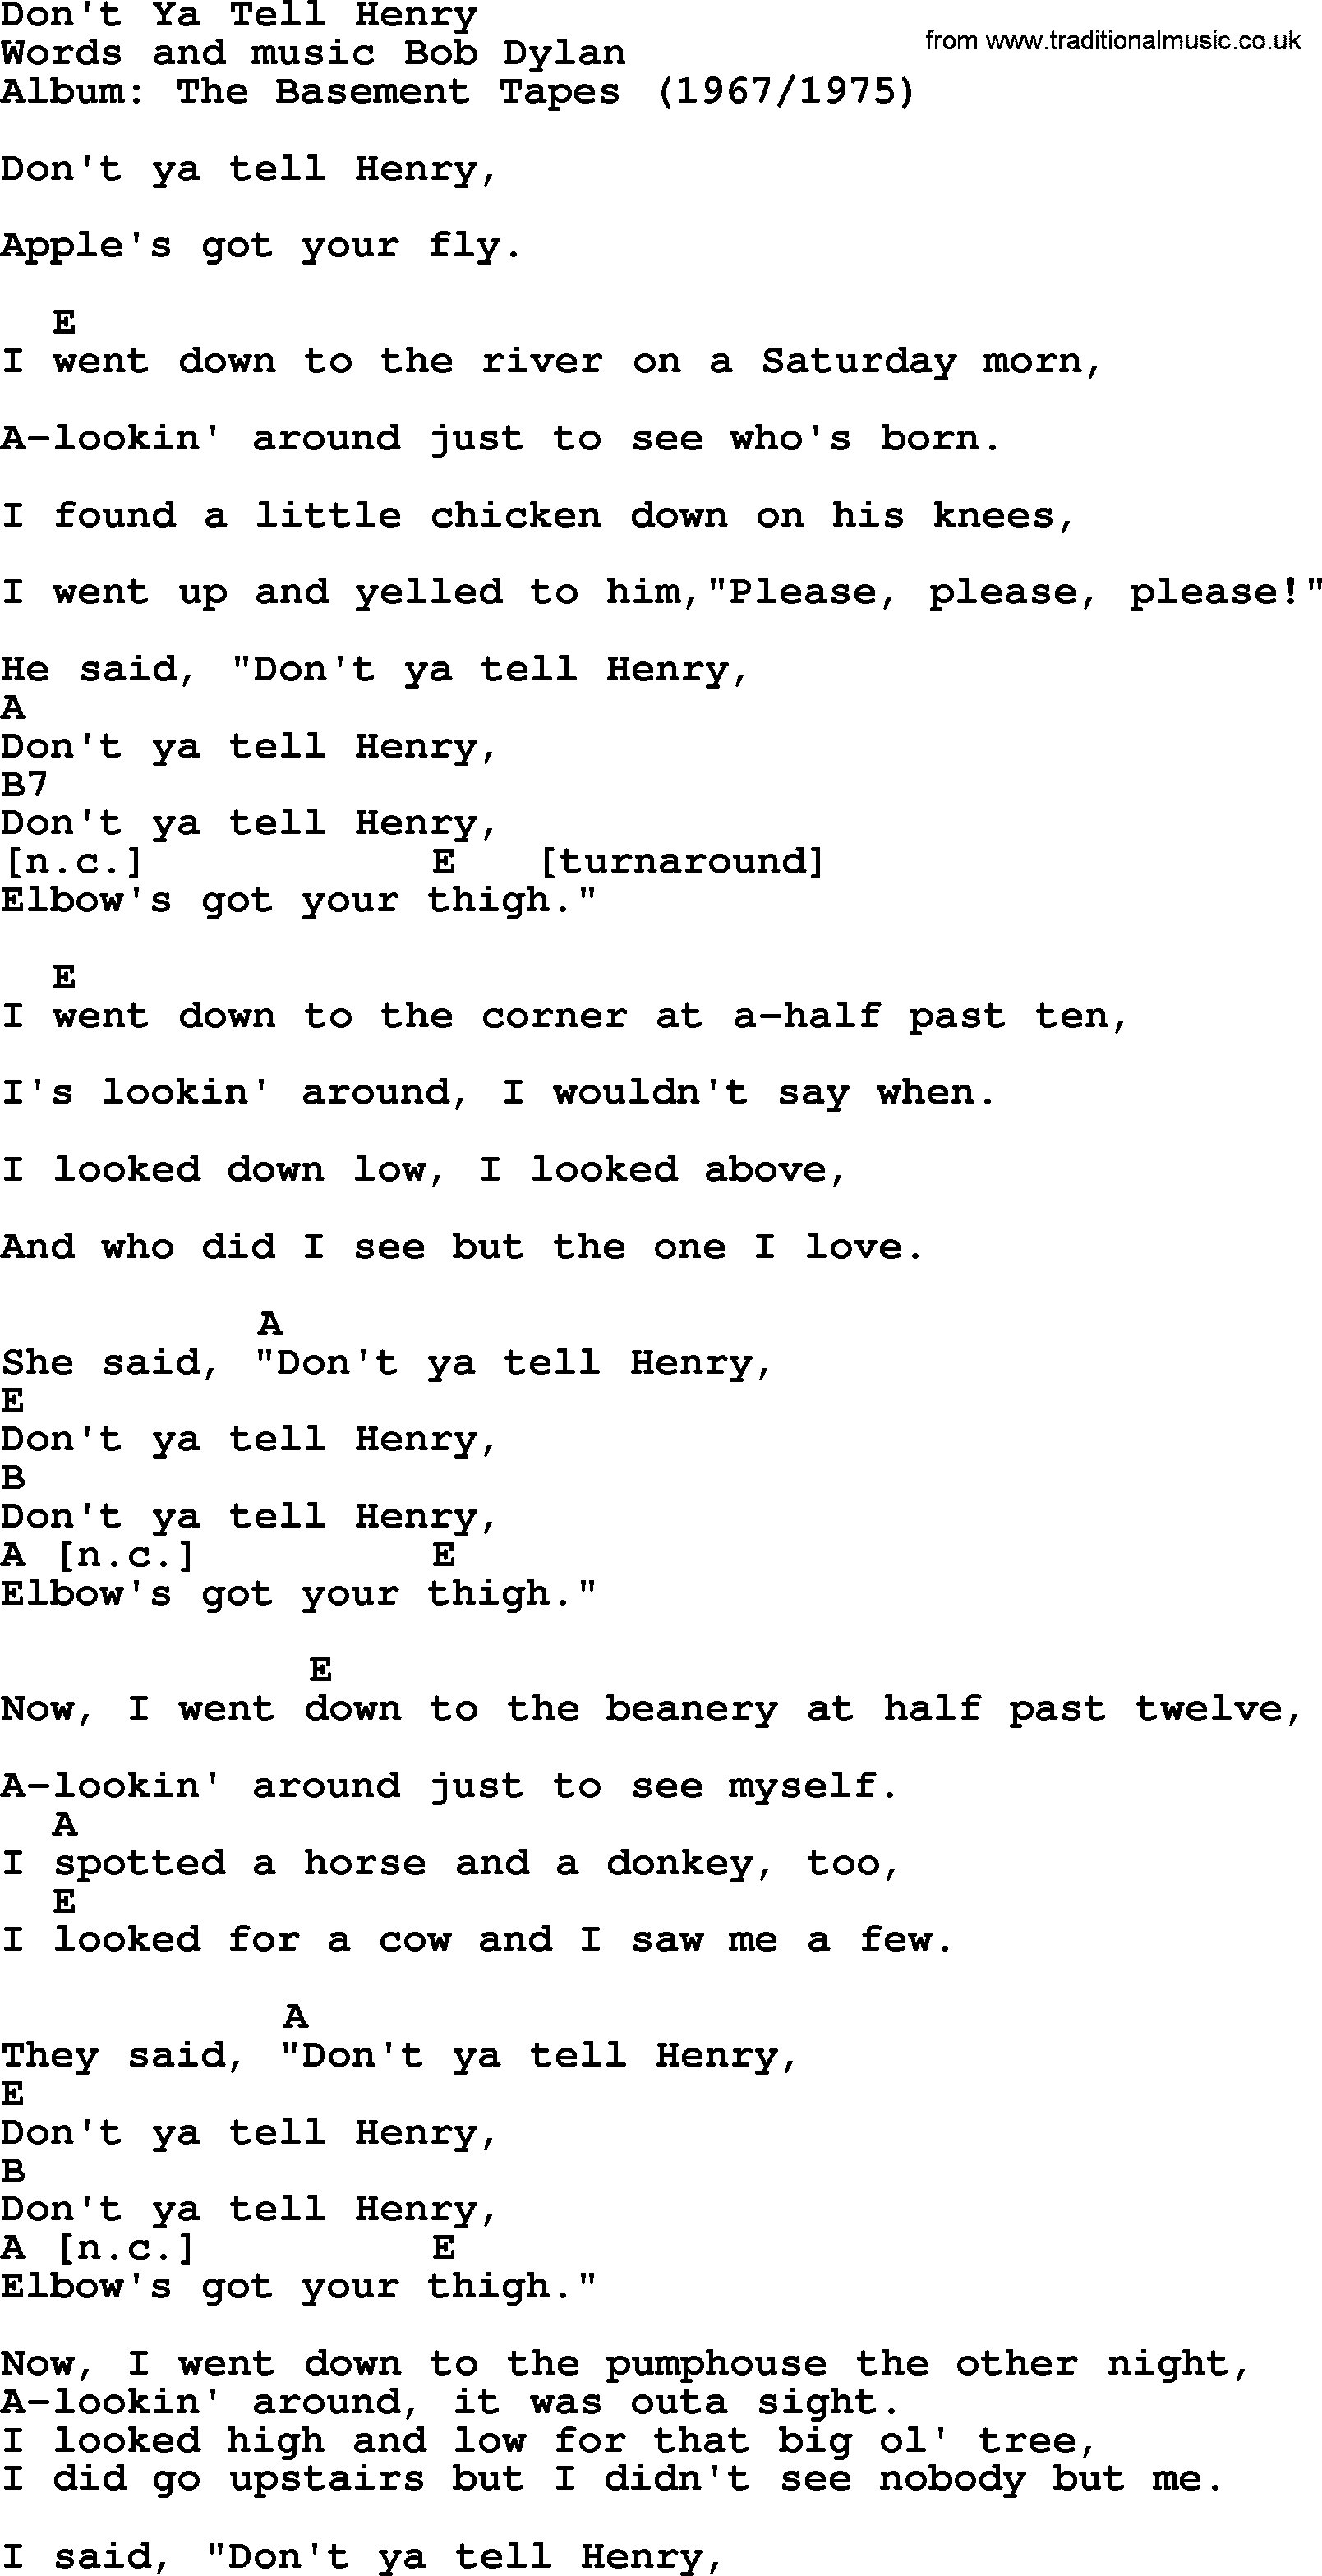 Bob Dylan song, lyrics with chords - Don't Ya Tell Henry